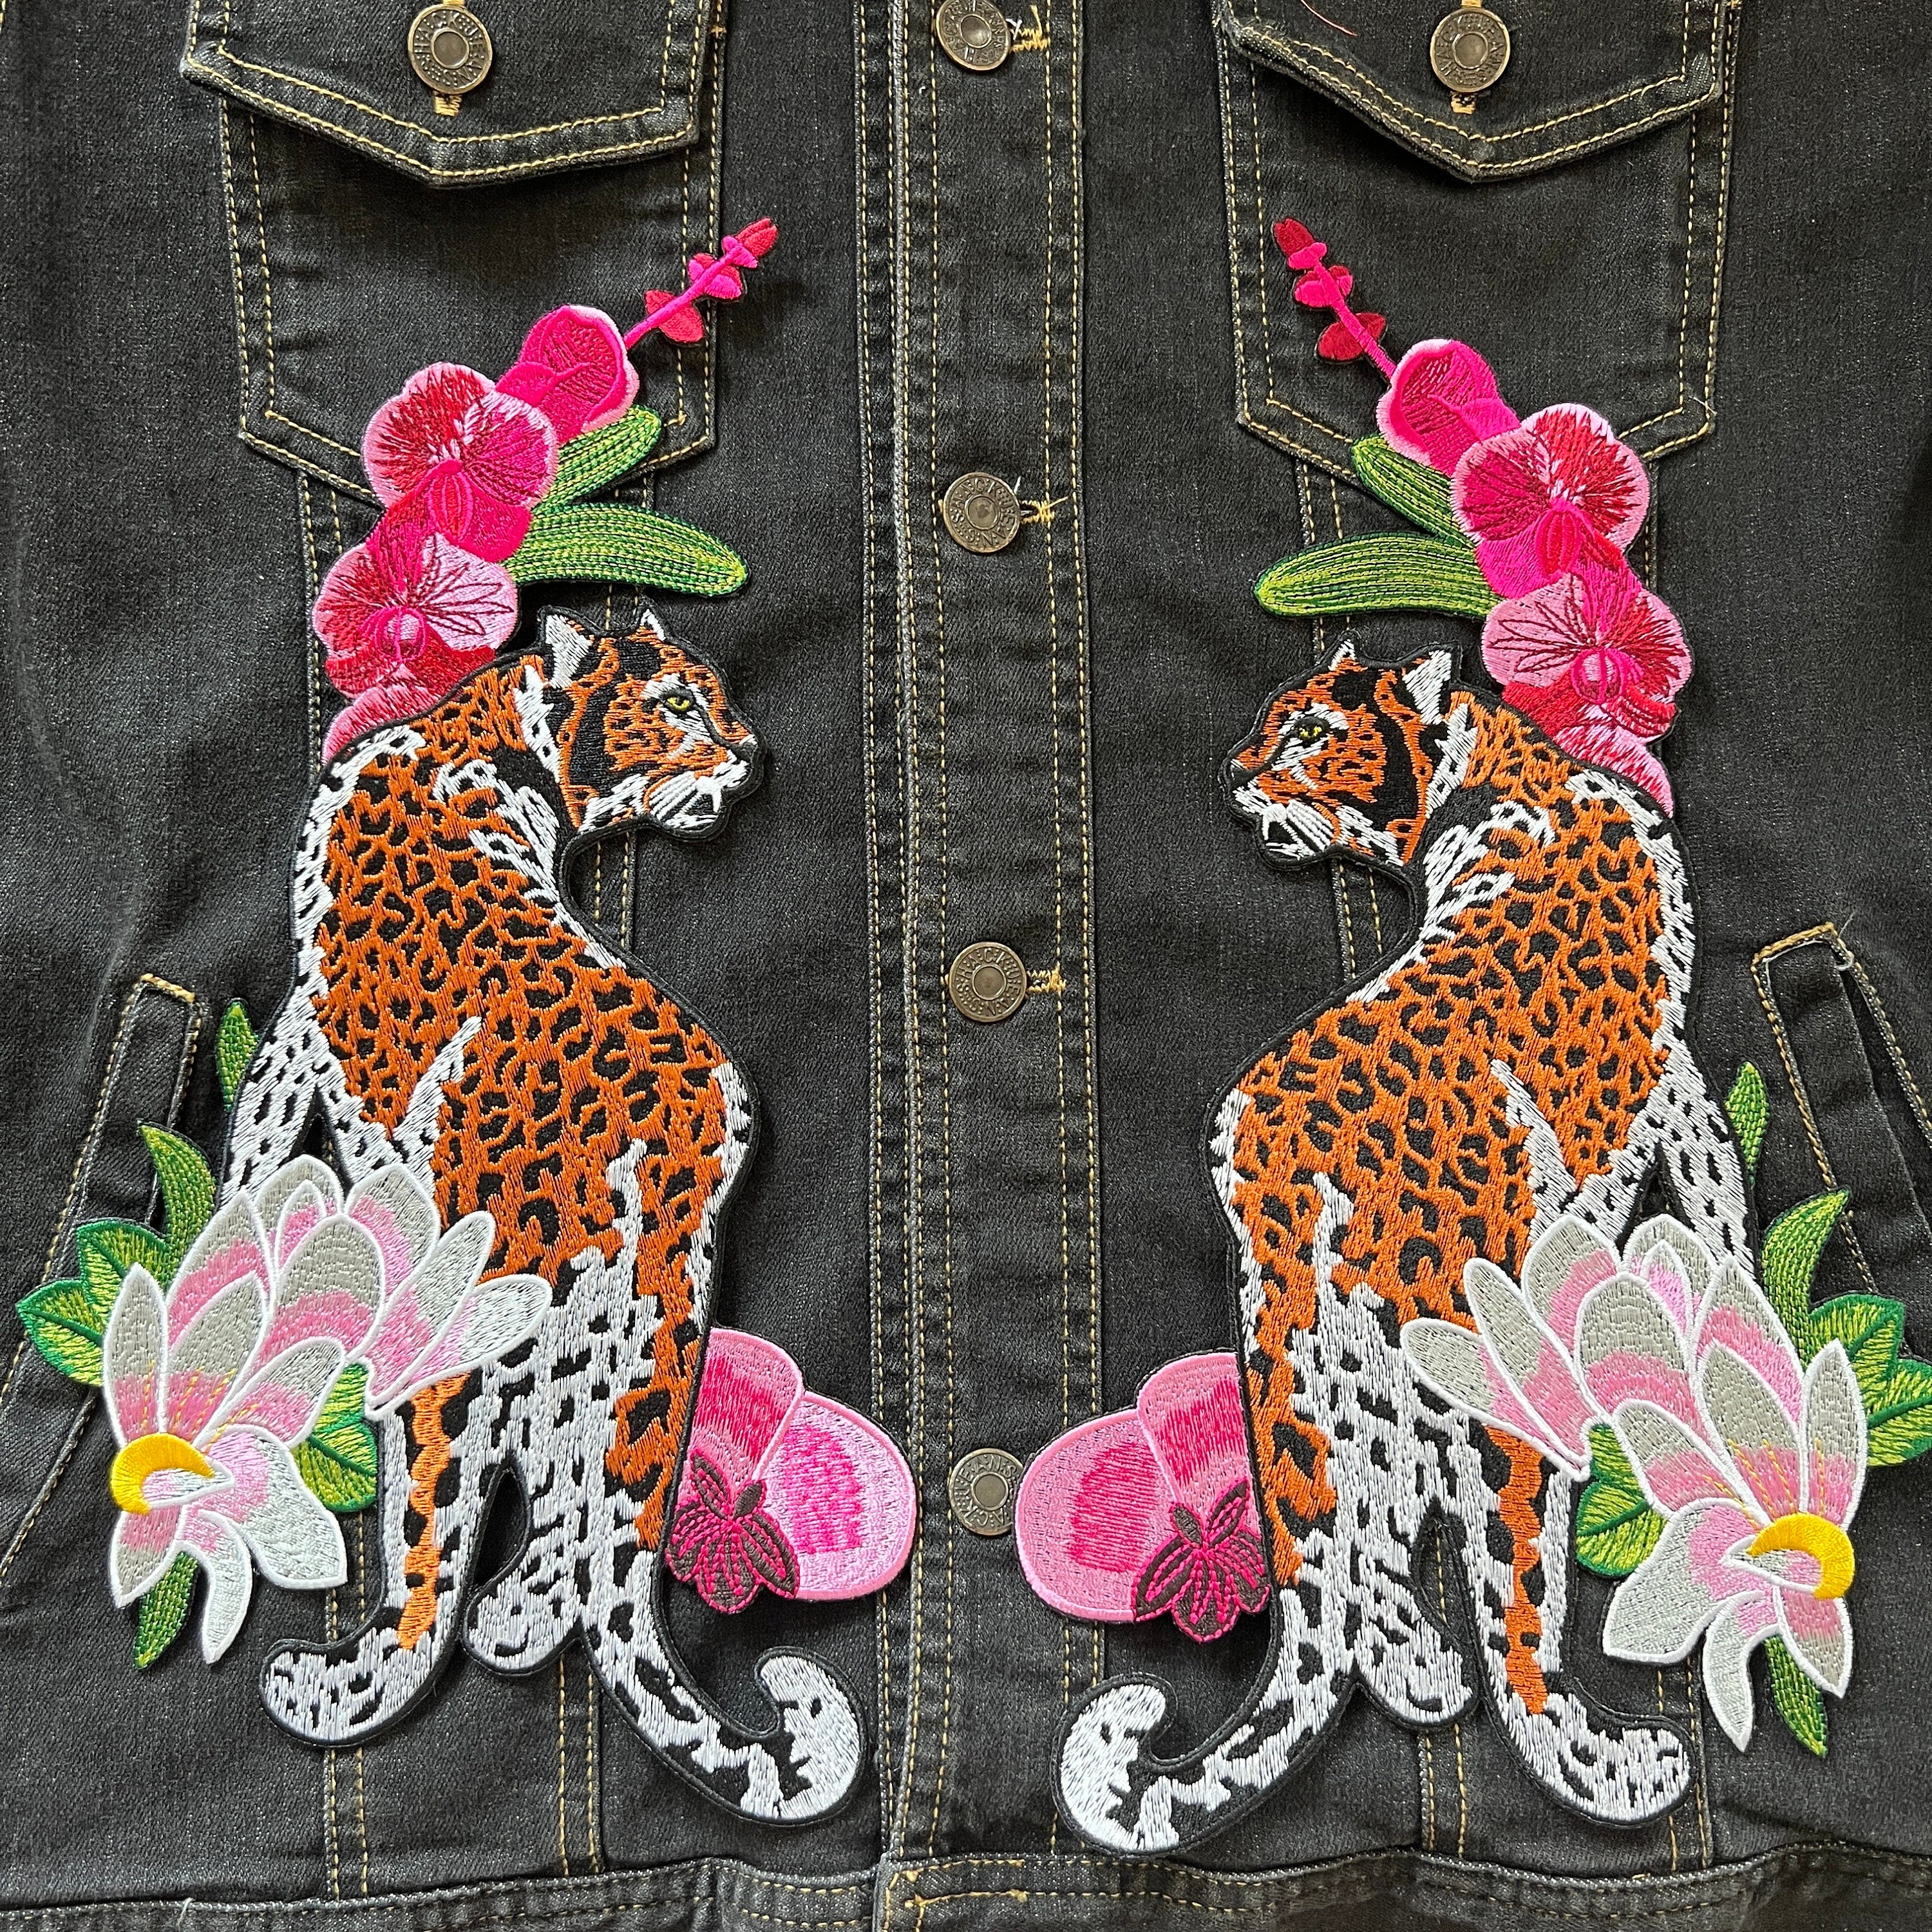  Tiger Design Ladies Denim Jacket with Fleece Hoodie - Beautiful  Women's Denim Jacket - Graphic Denim Jacket - Black, S : Clothing, Shoes &  Jewelry